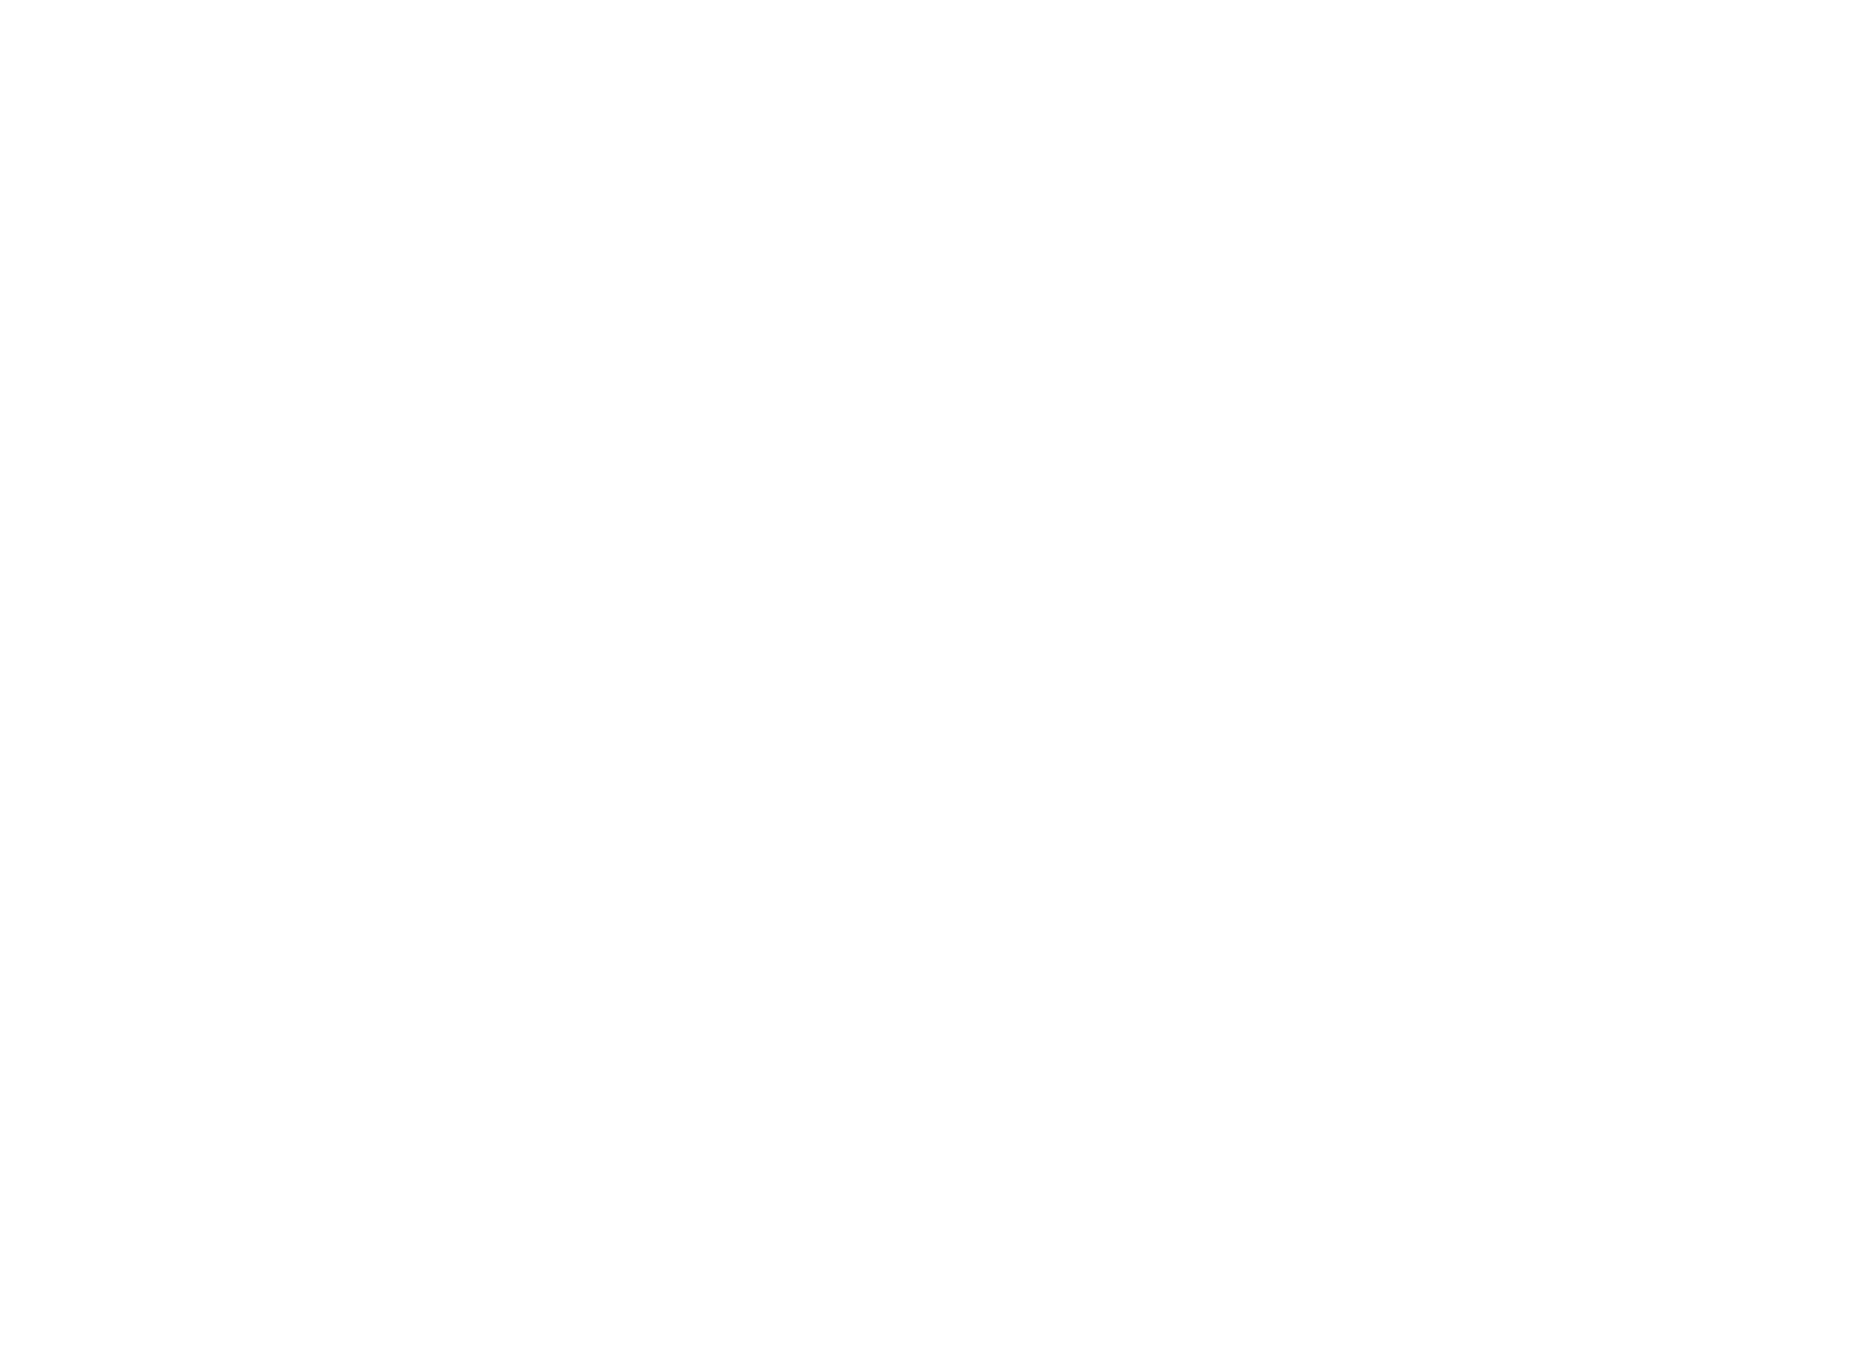 Proud supporter of veterans employment logo.